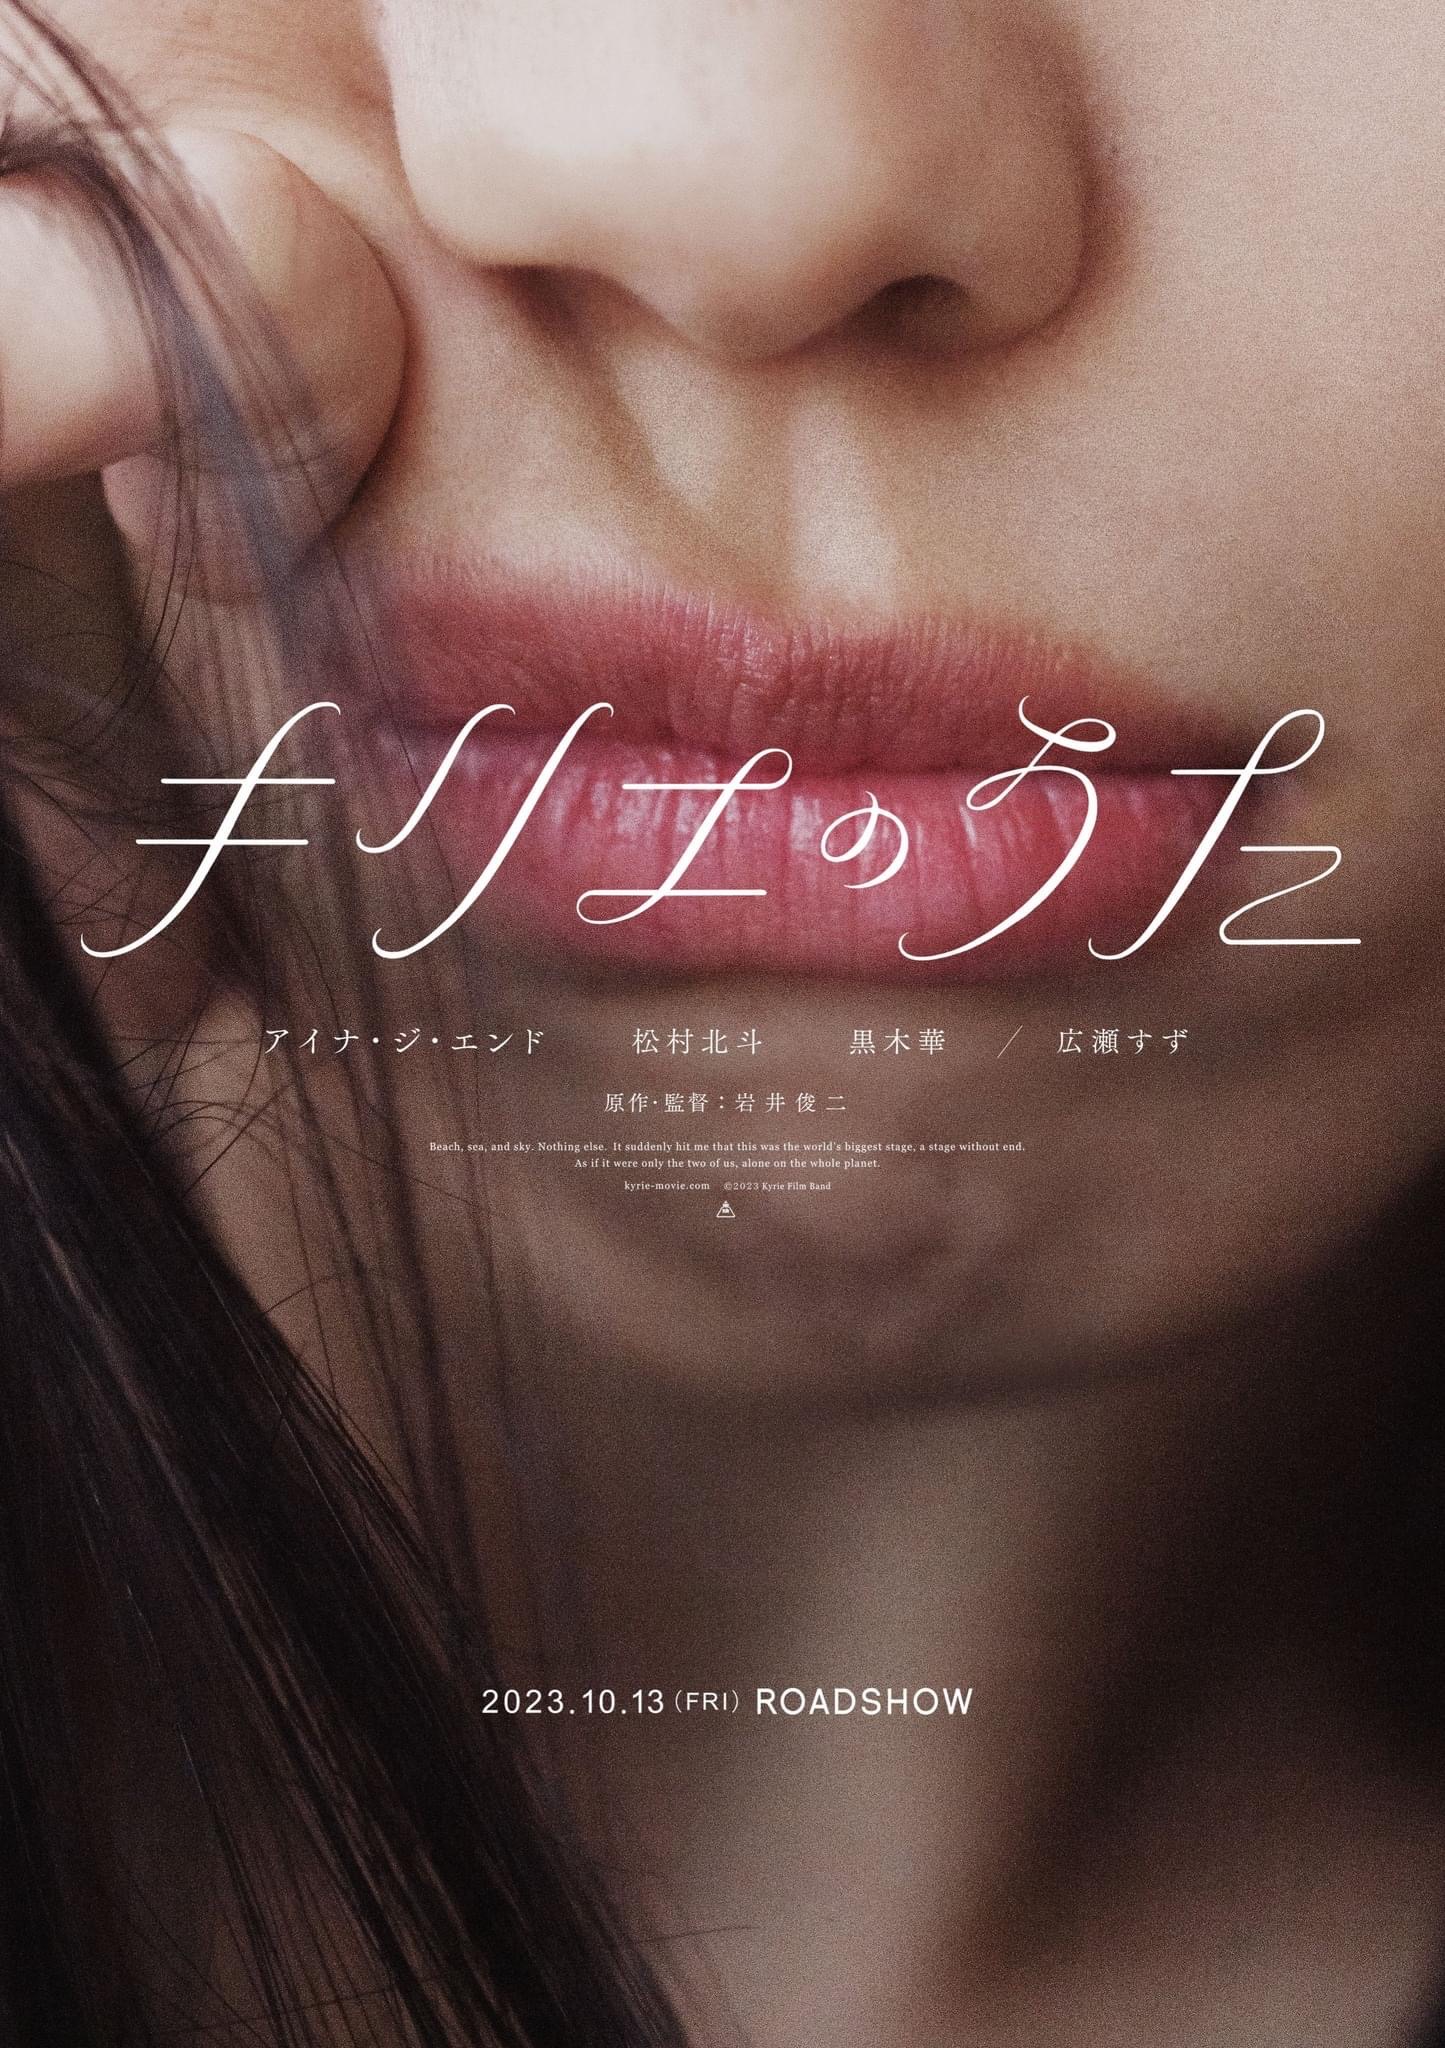 Nouveau film Shunji Iwai - Kyrie no Uta | JAPON CINEMA